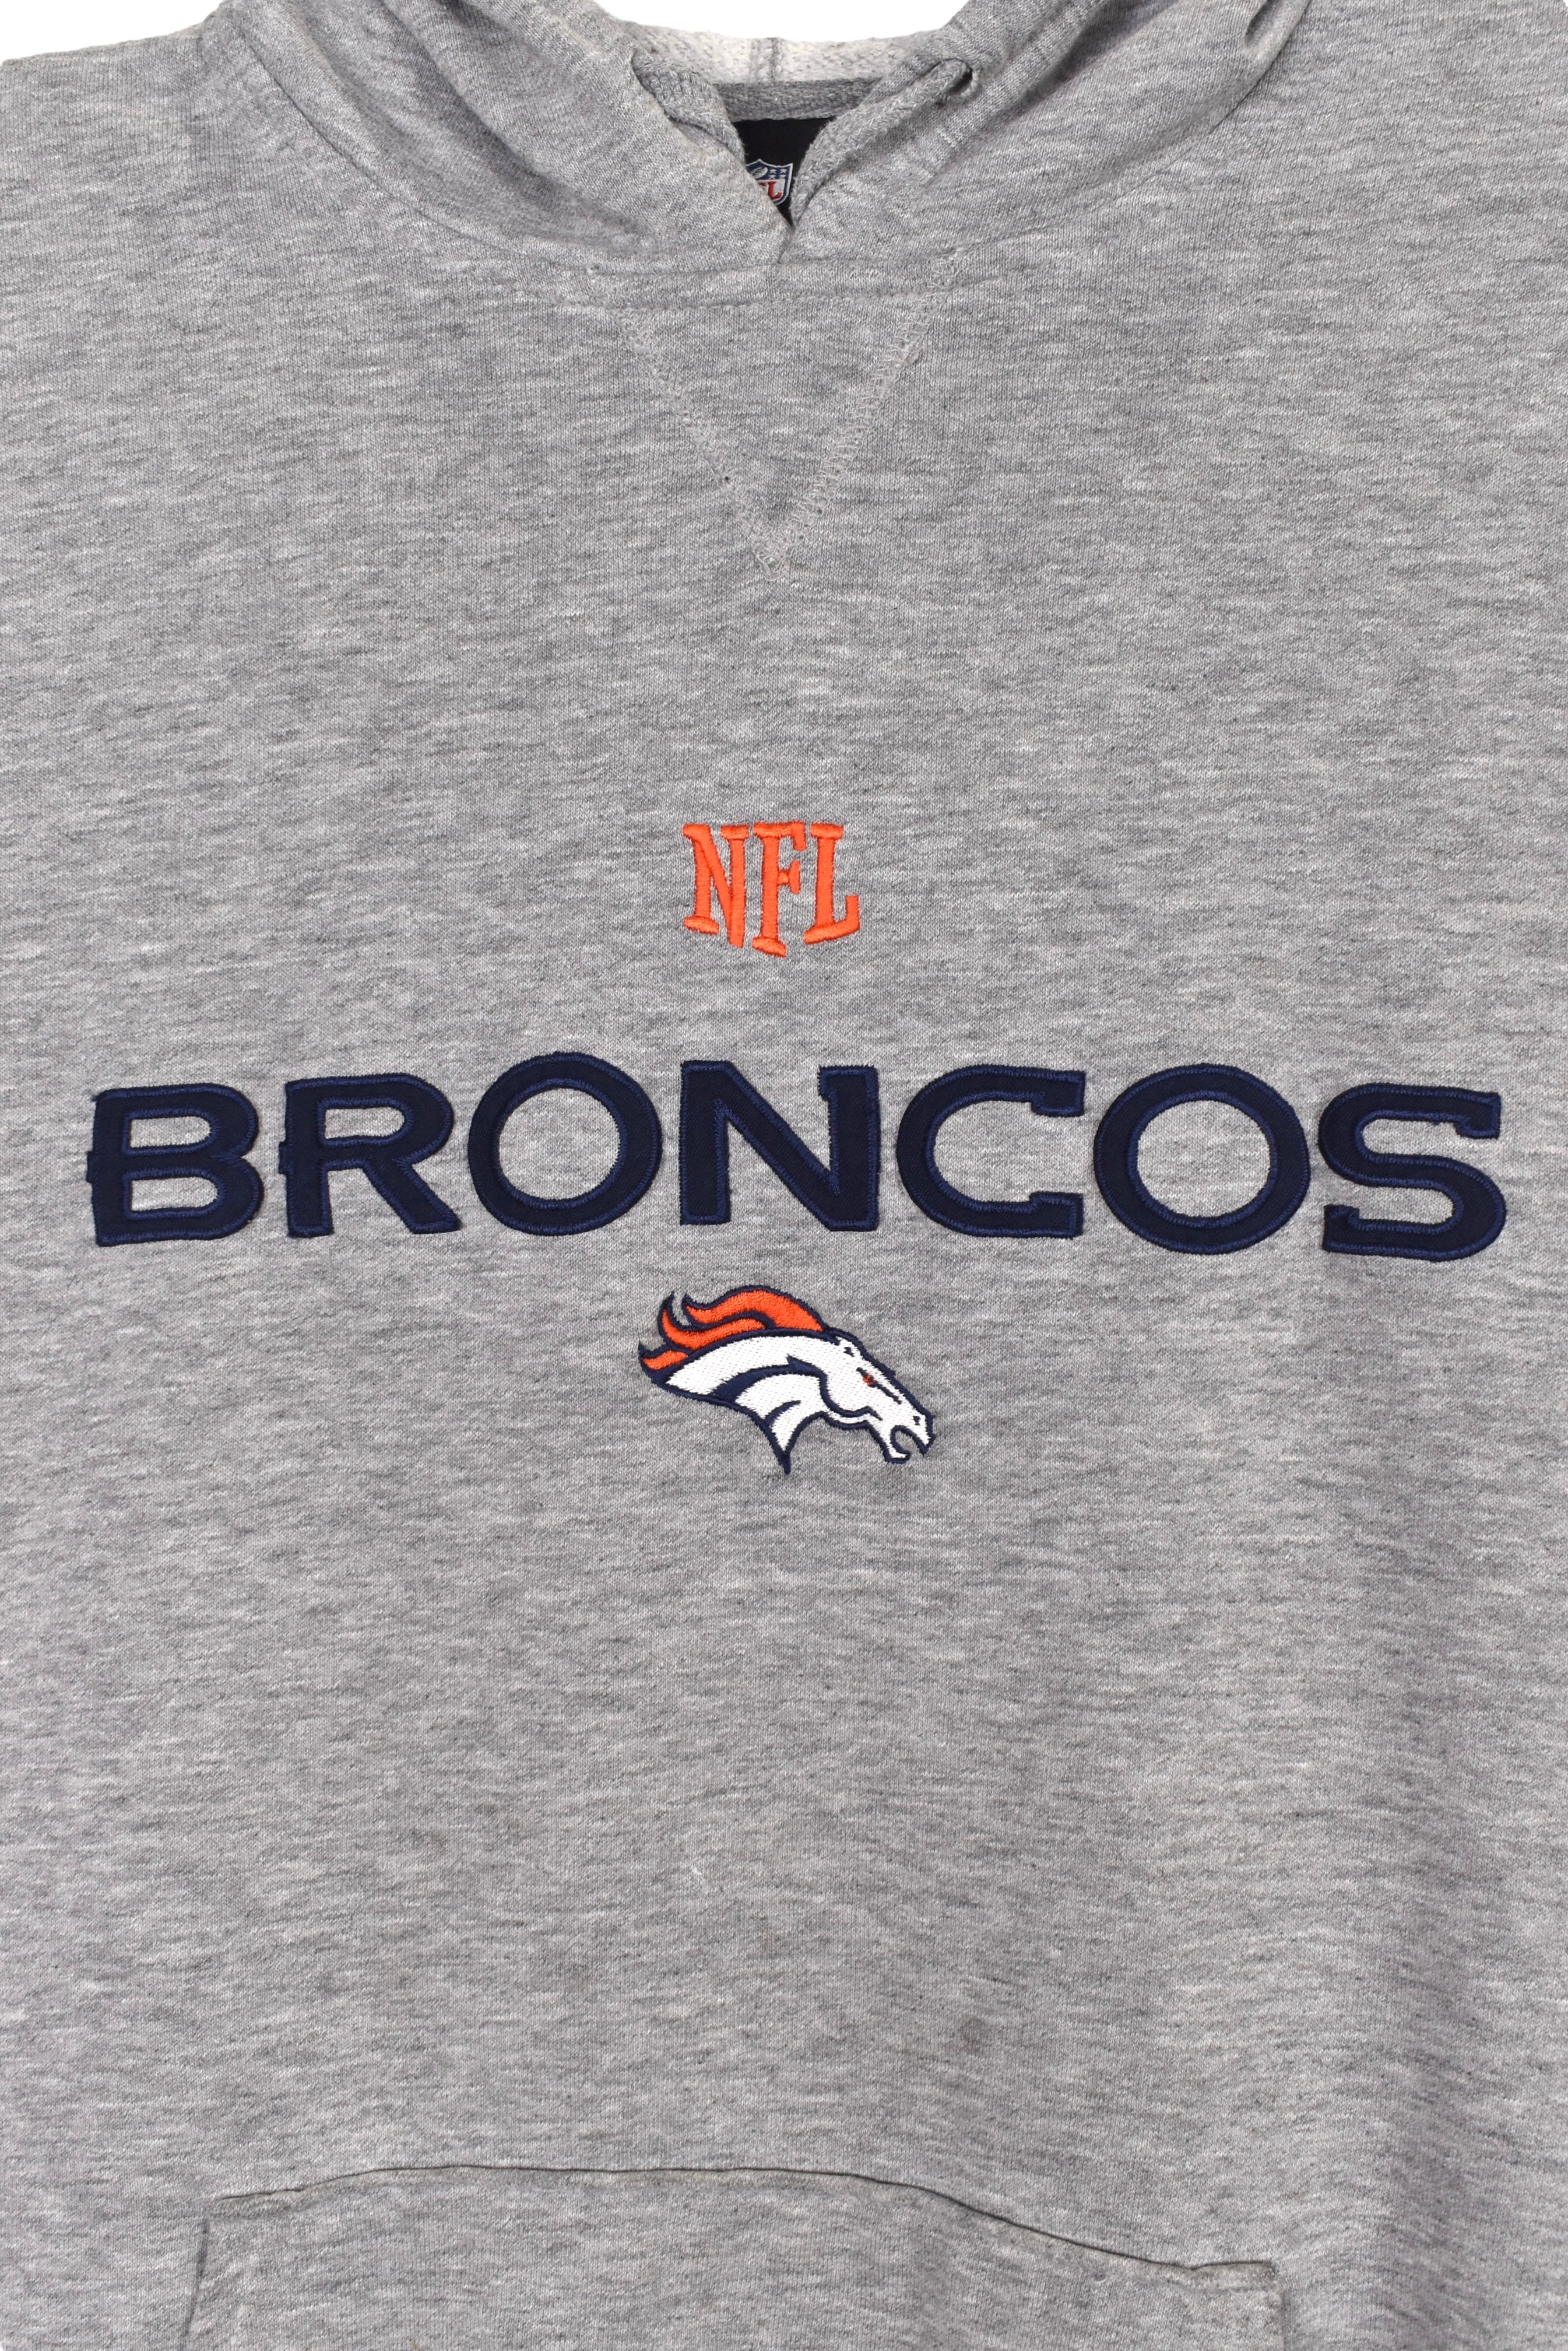 Vintage Denver Broncos hoodie (XL), grey NFL embroidered sweatshirt